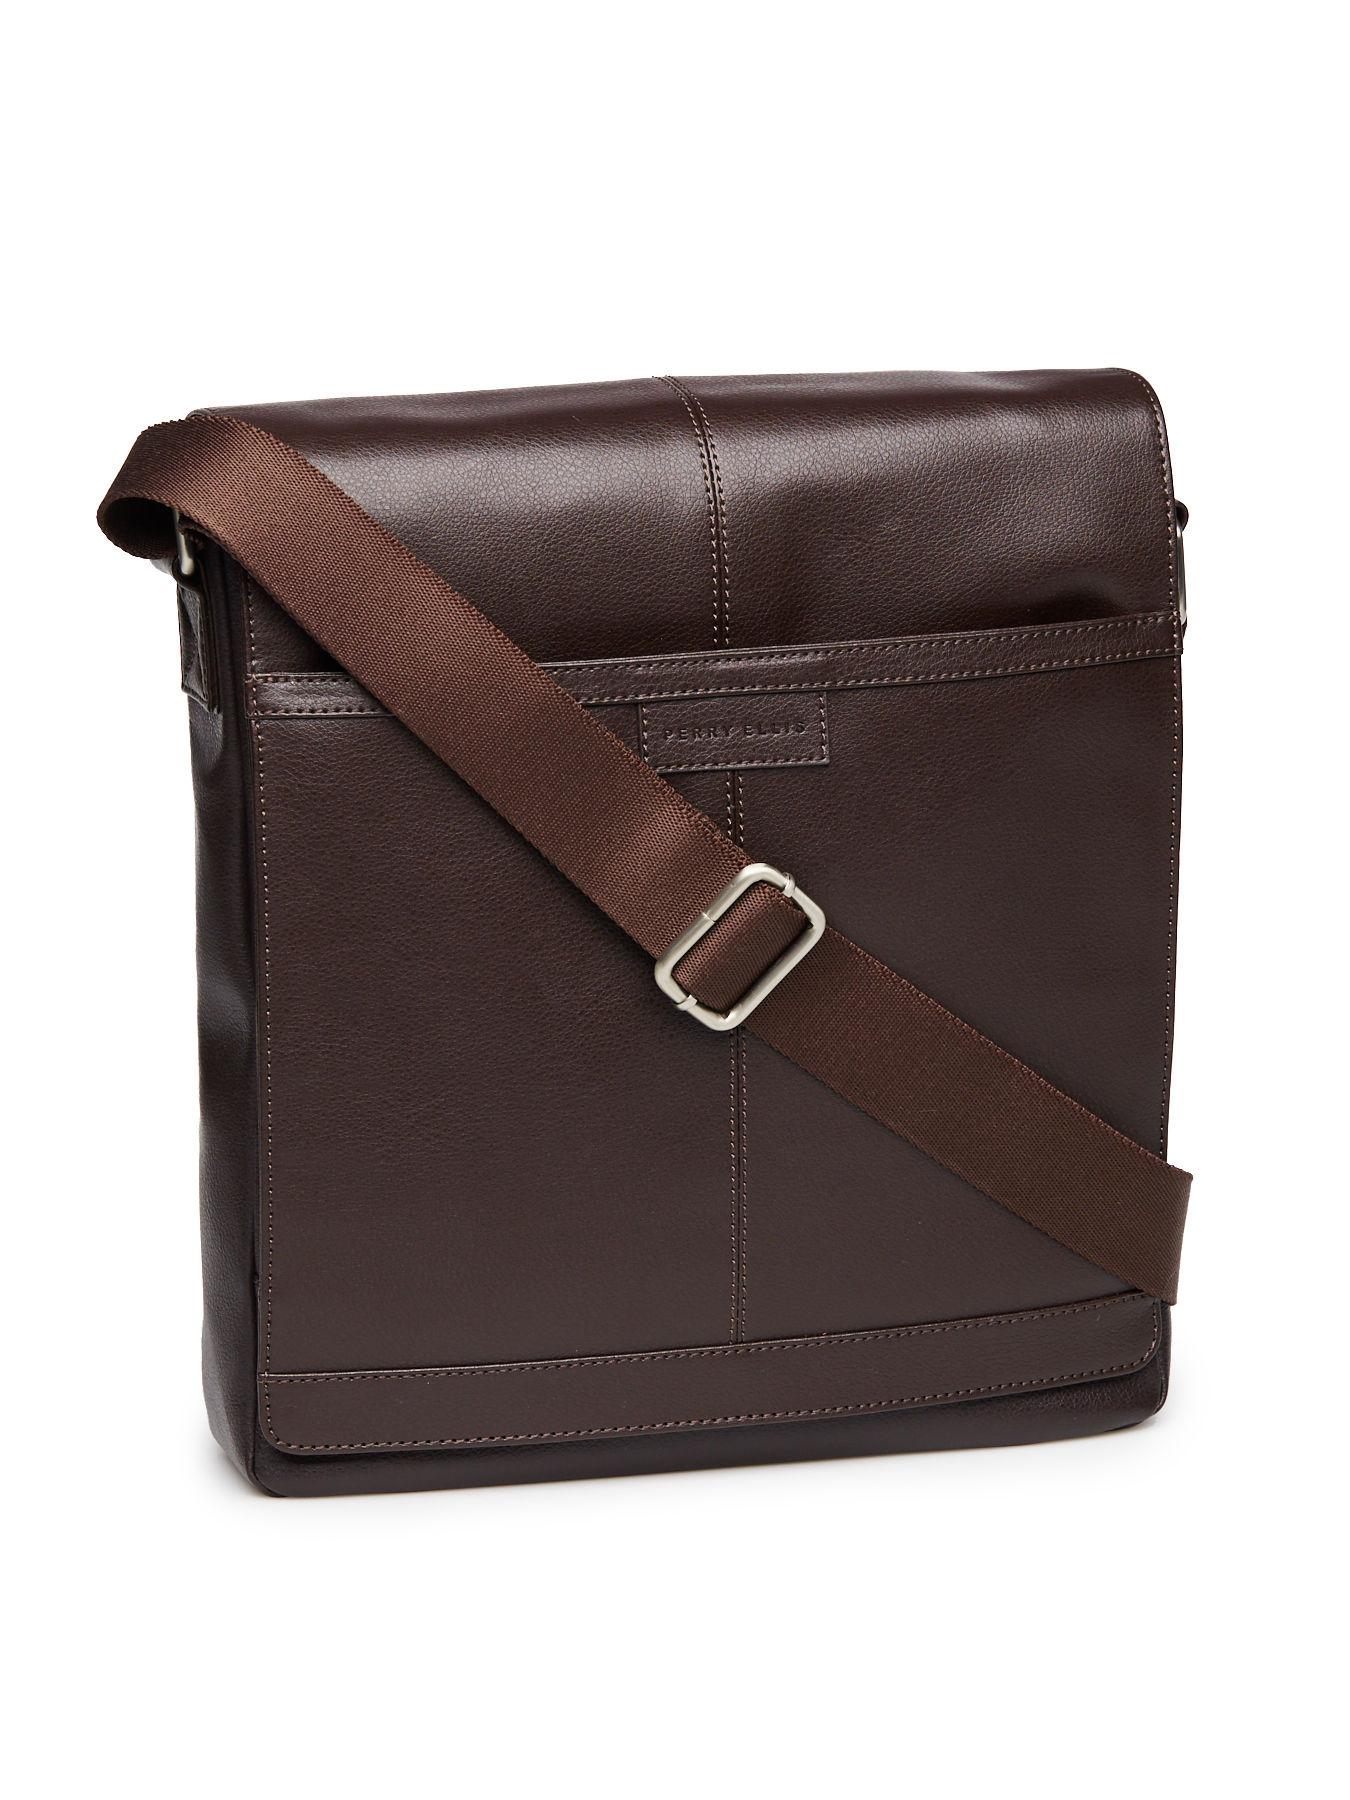 Lyst - Perry Ellis Leather Crossbody Bag in Brown for Men